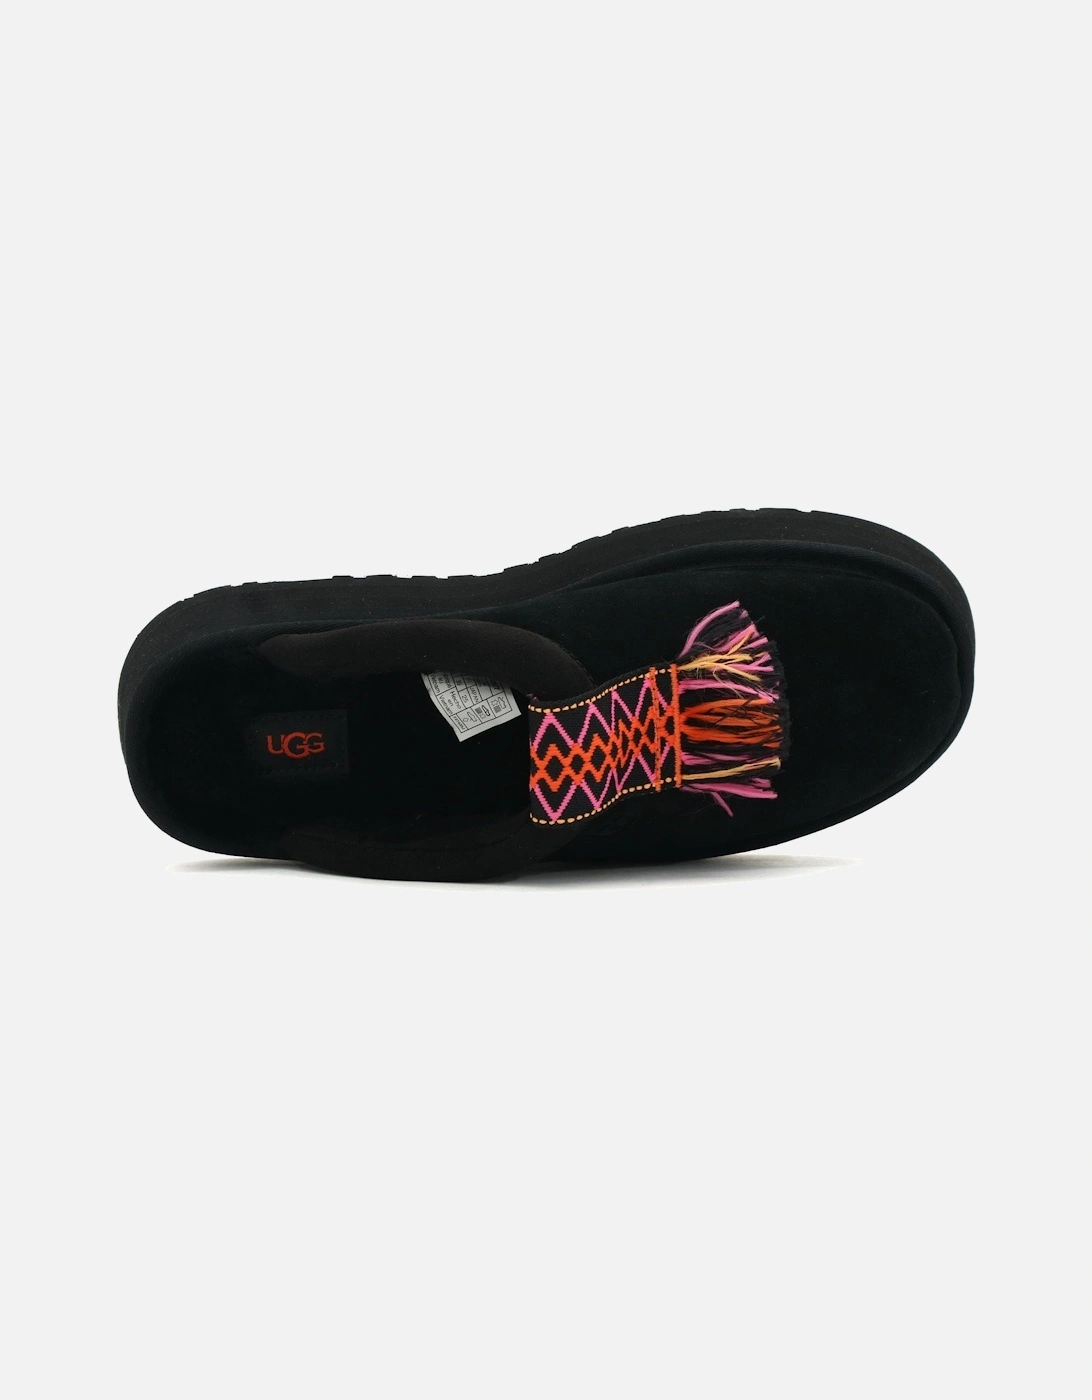 Tazzle Black Slip On Shoe